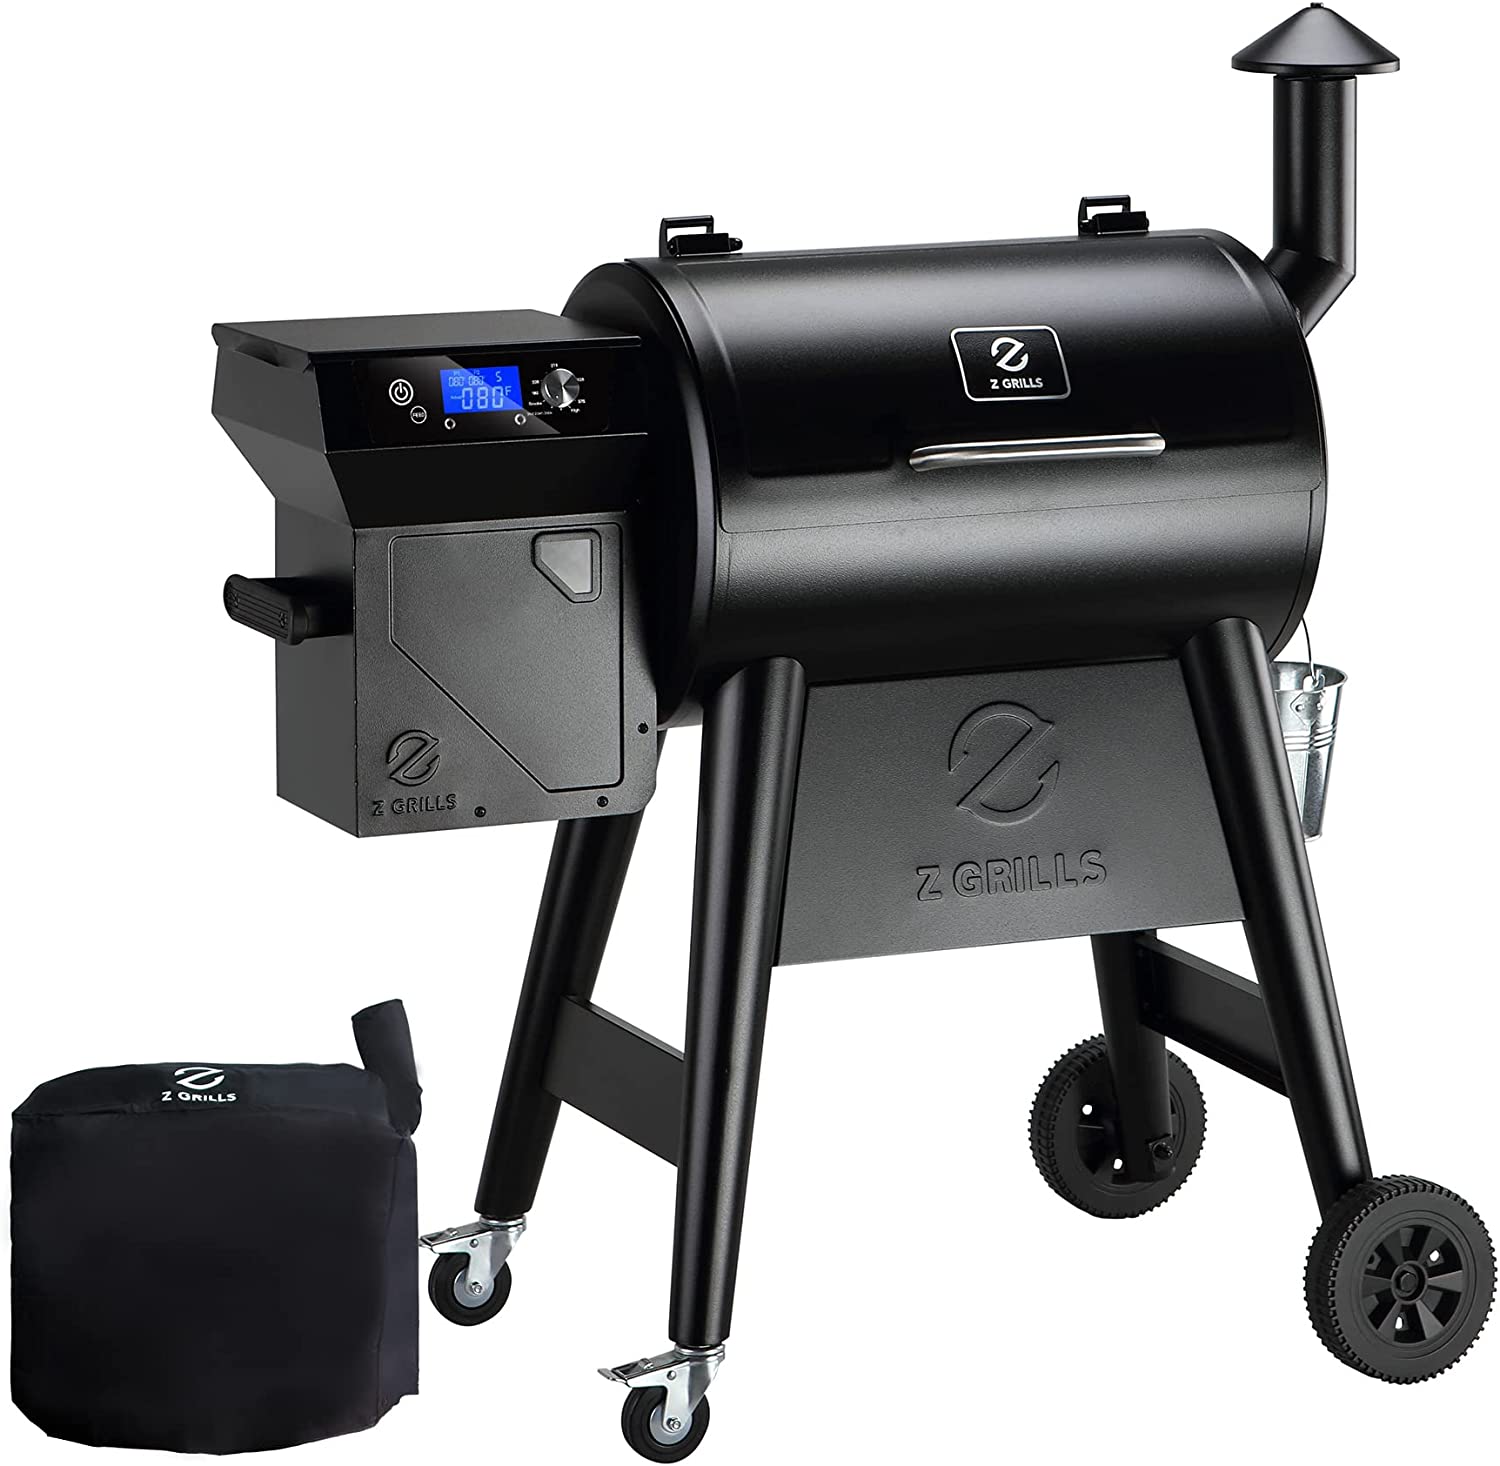 https://op2.0ps.us/original/opplanet-z-grills-pioneer-wood-pellet-grill-smoker-black-medium-zpg-450b-main